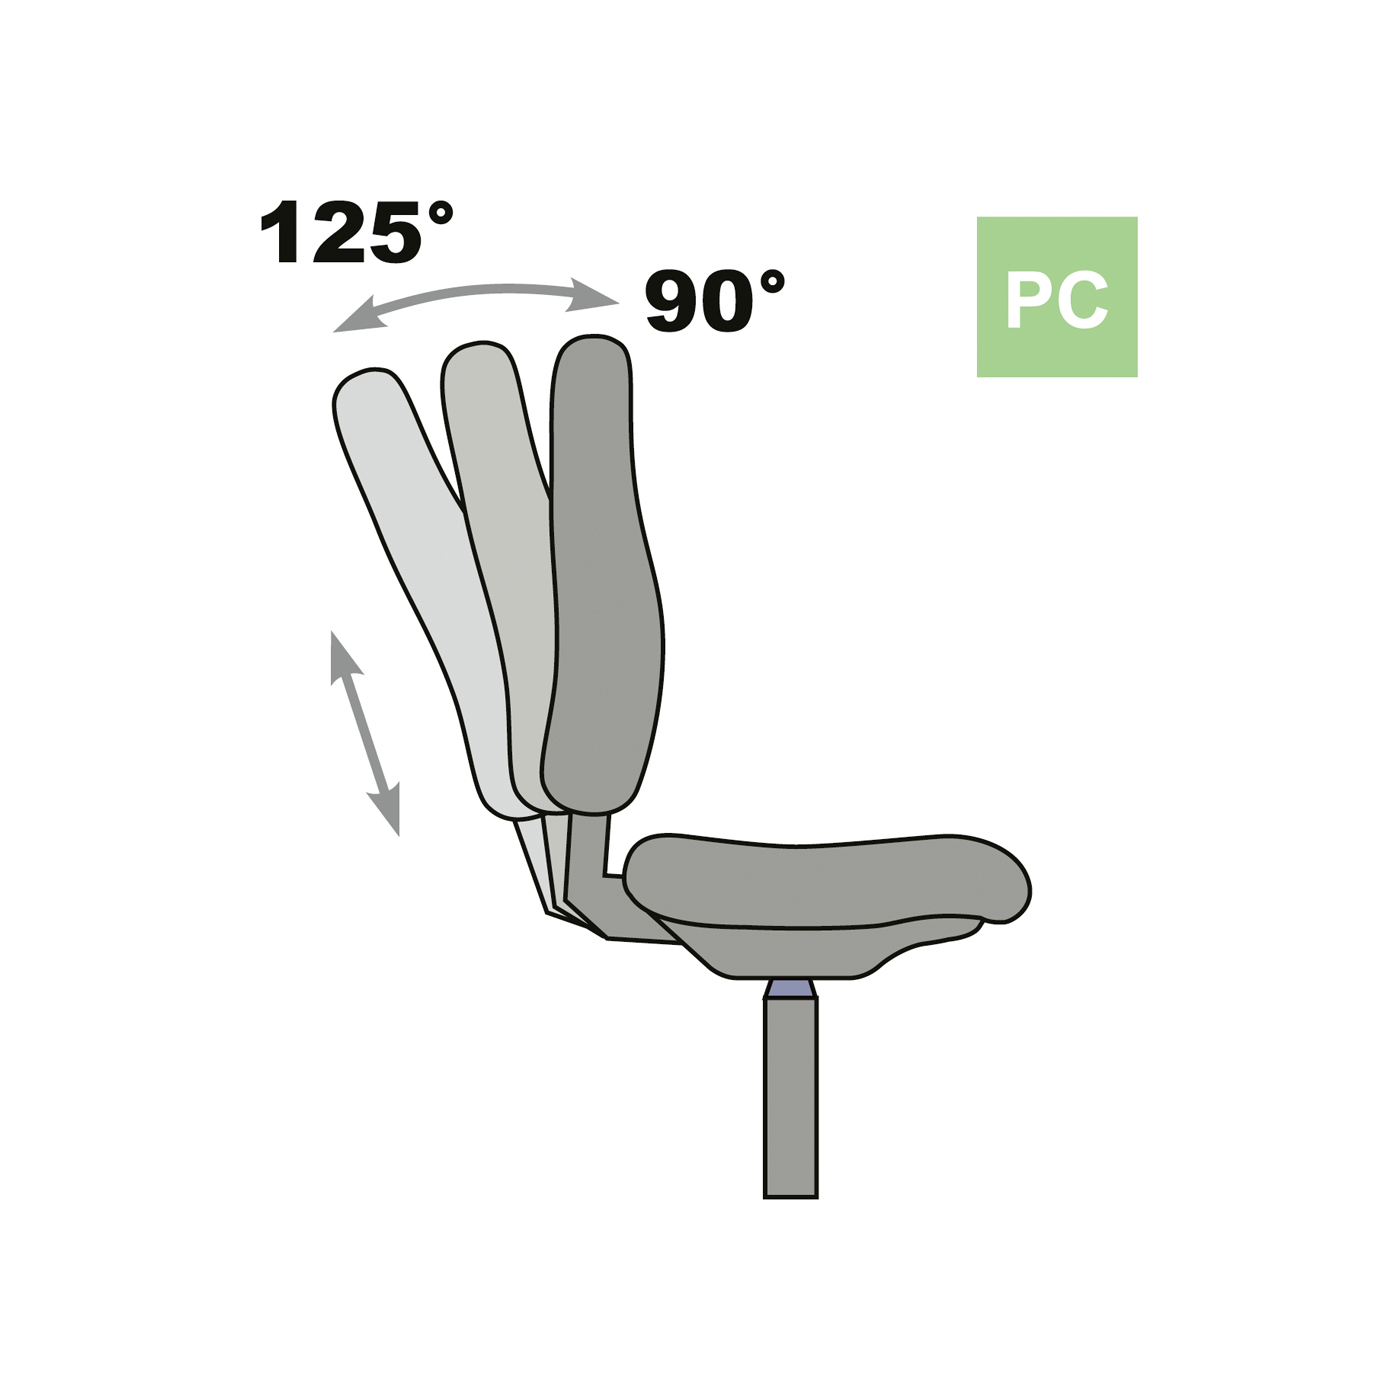 Tec basic Swivel Chair, PC Technique, PU - 1 piece